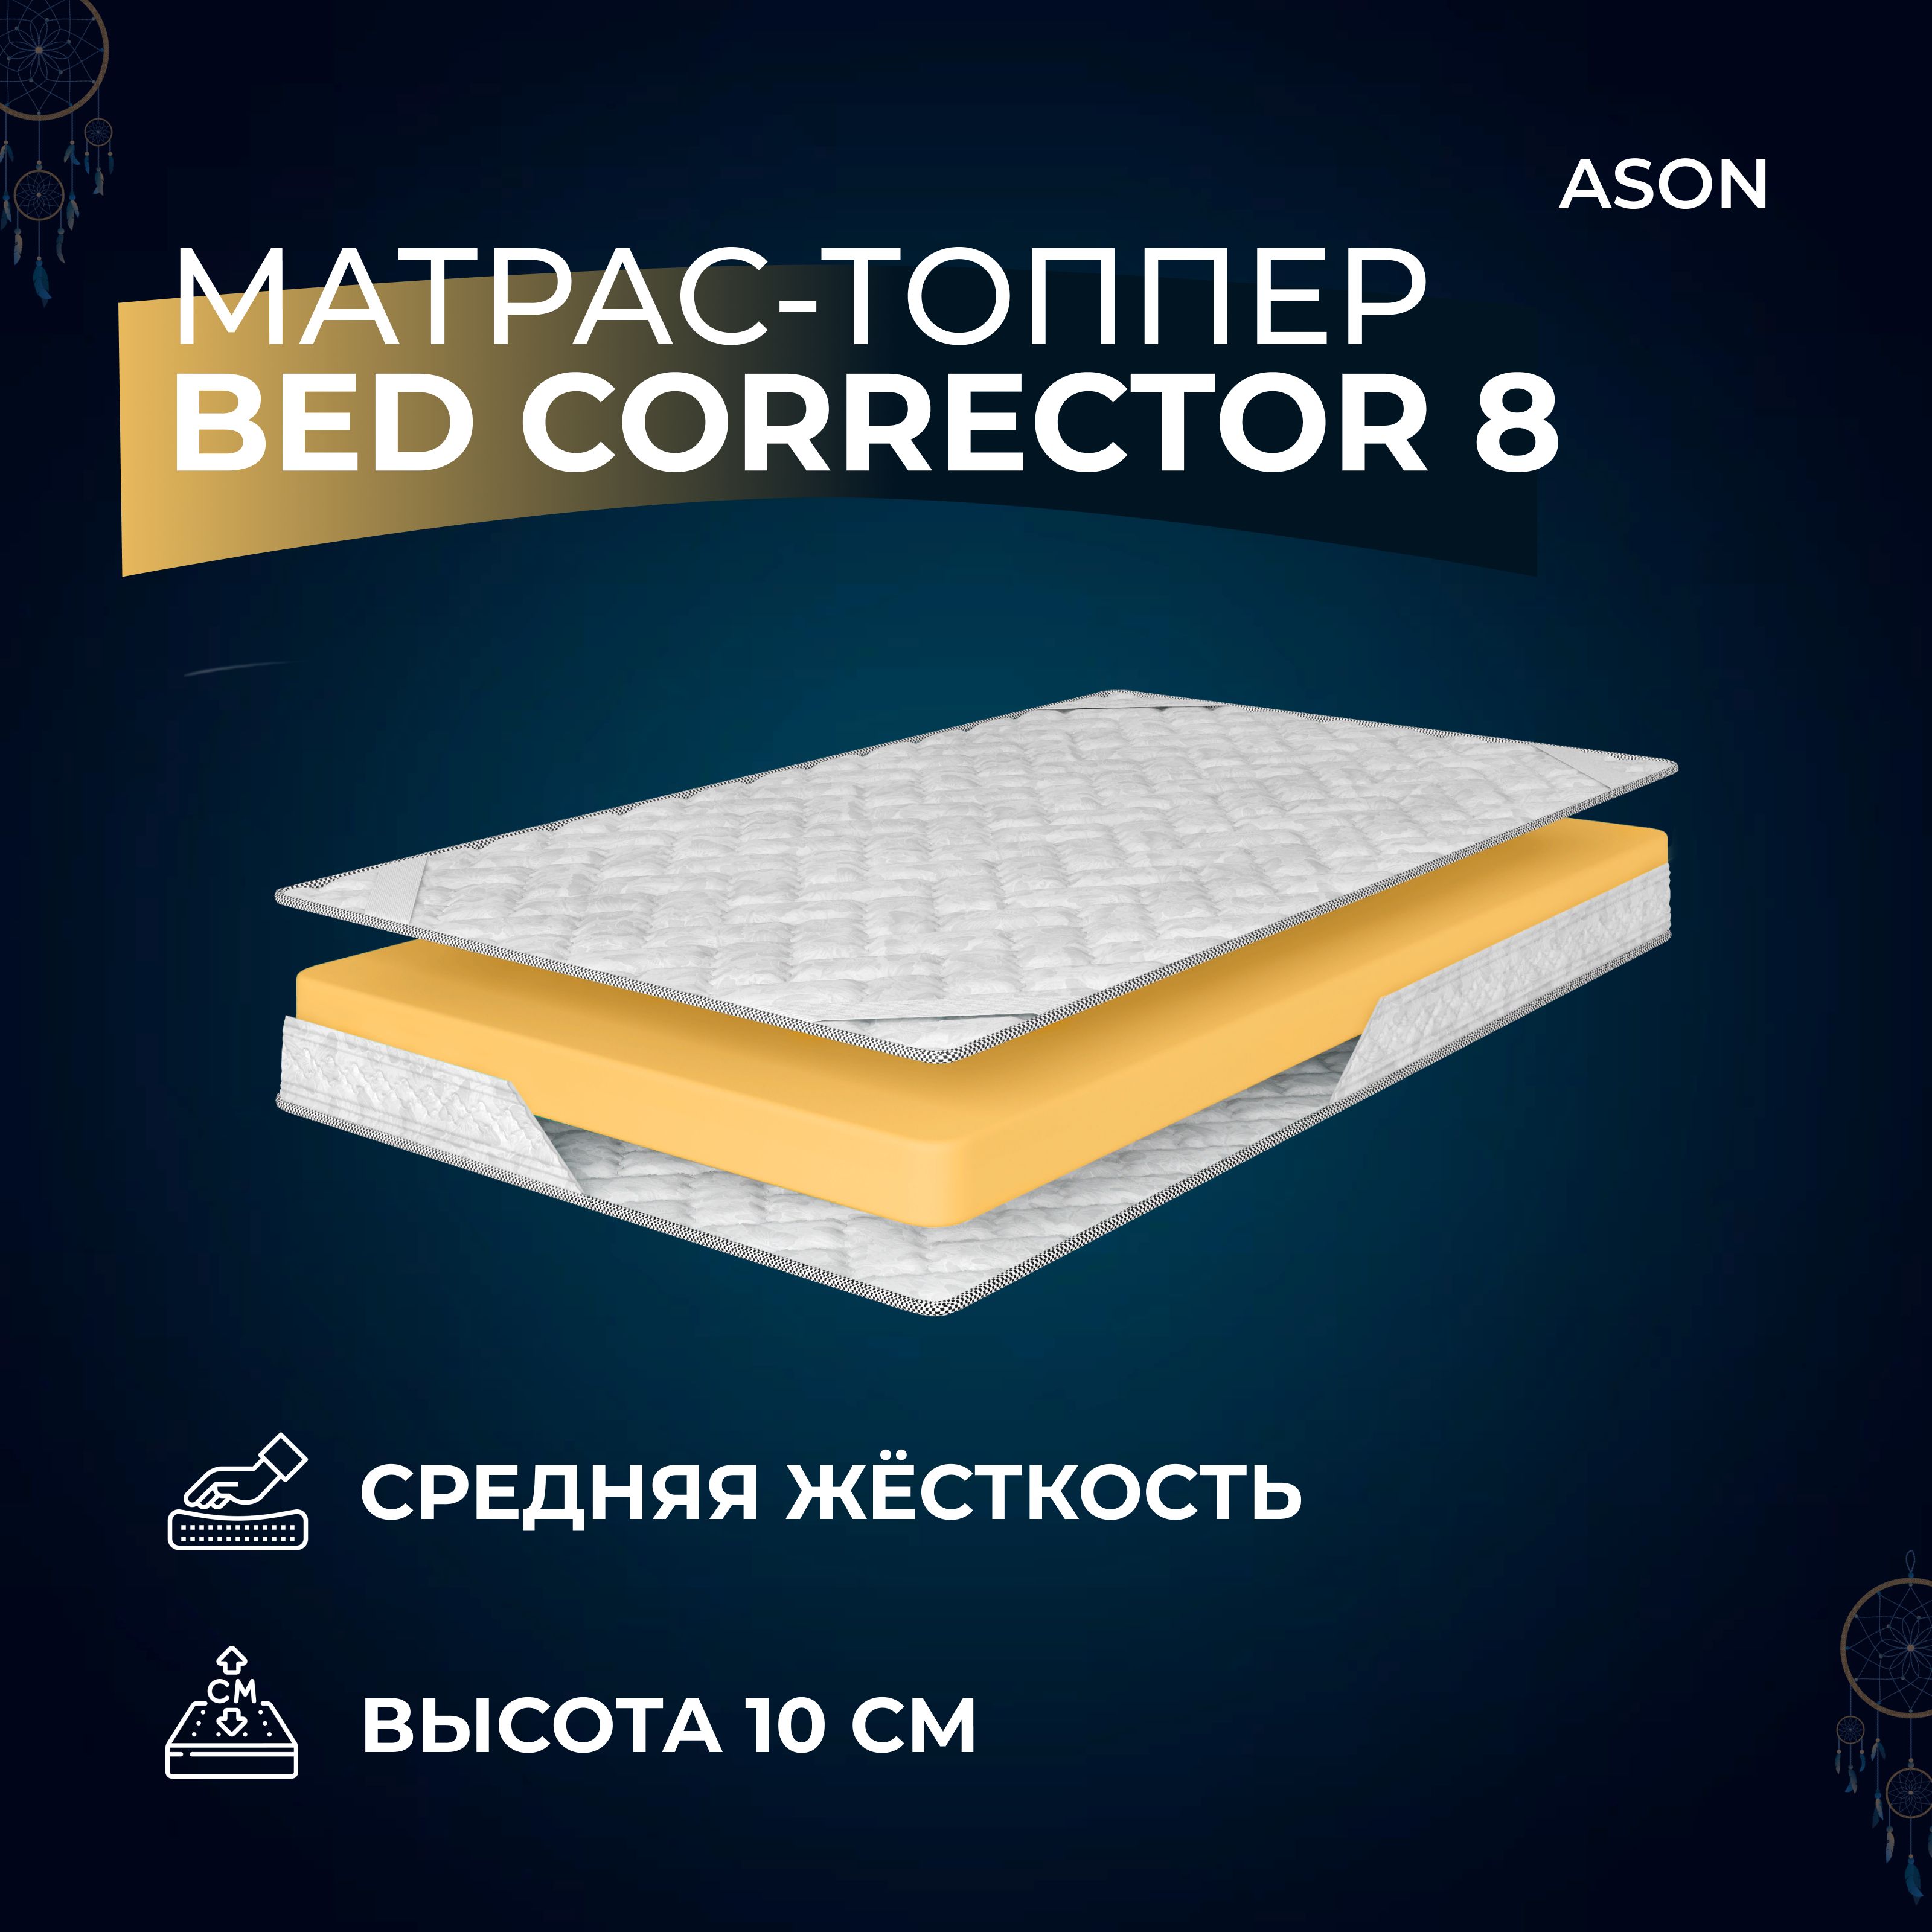 Матрас-топпер 100х200 Ason, Bed corrector 8